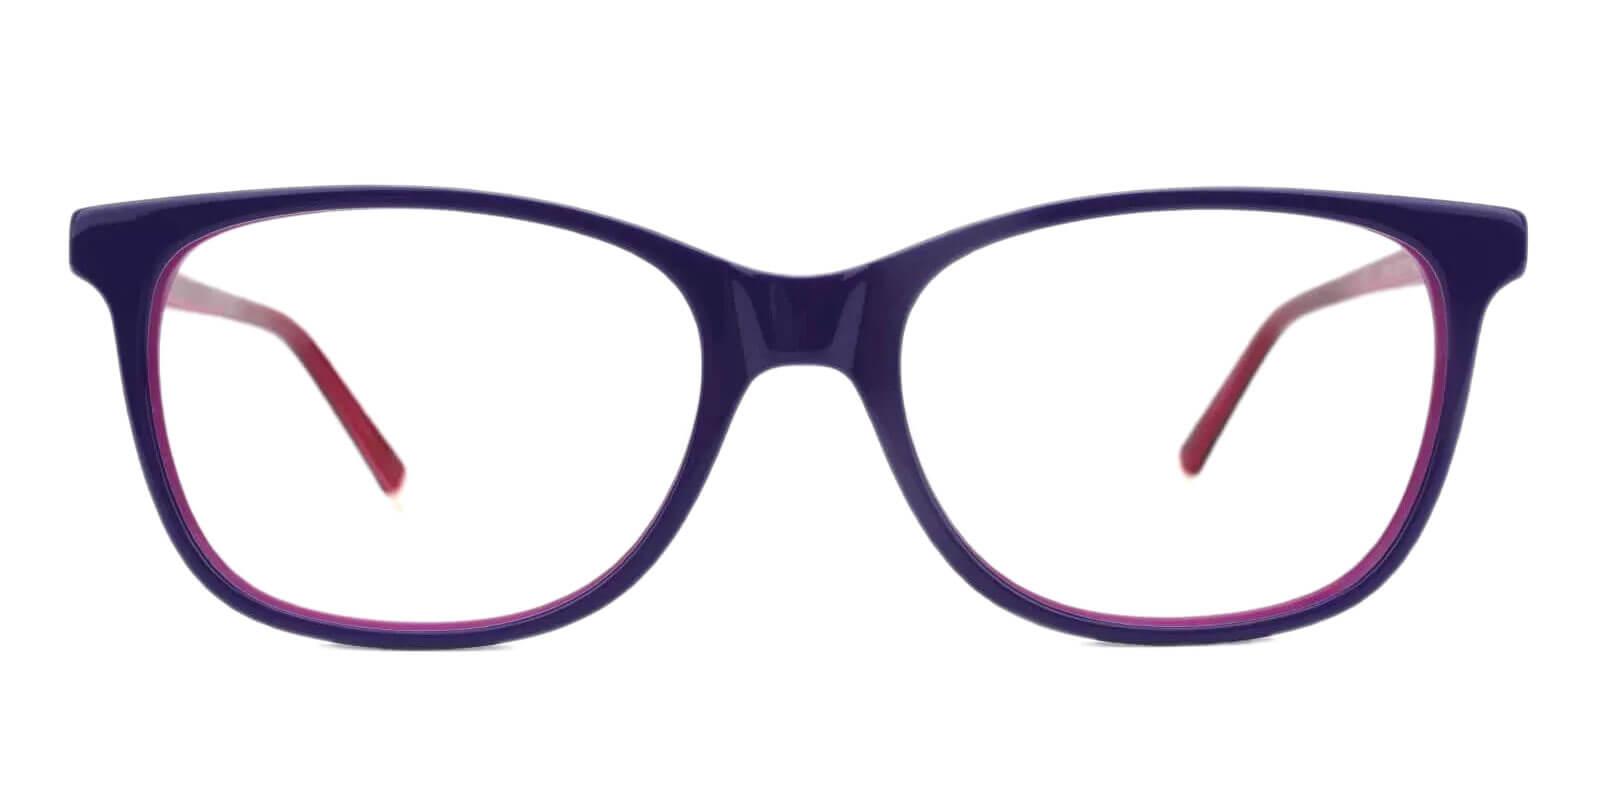 Hibbard Blue Acetate Eyeglasses , SpringHinges , UniversalBridgeFit Frames from ABBE Glasses